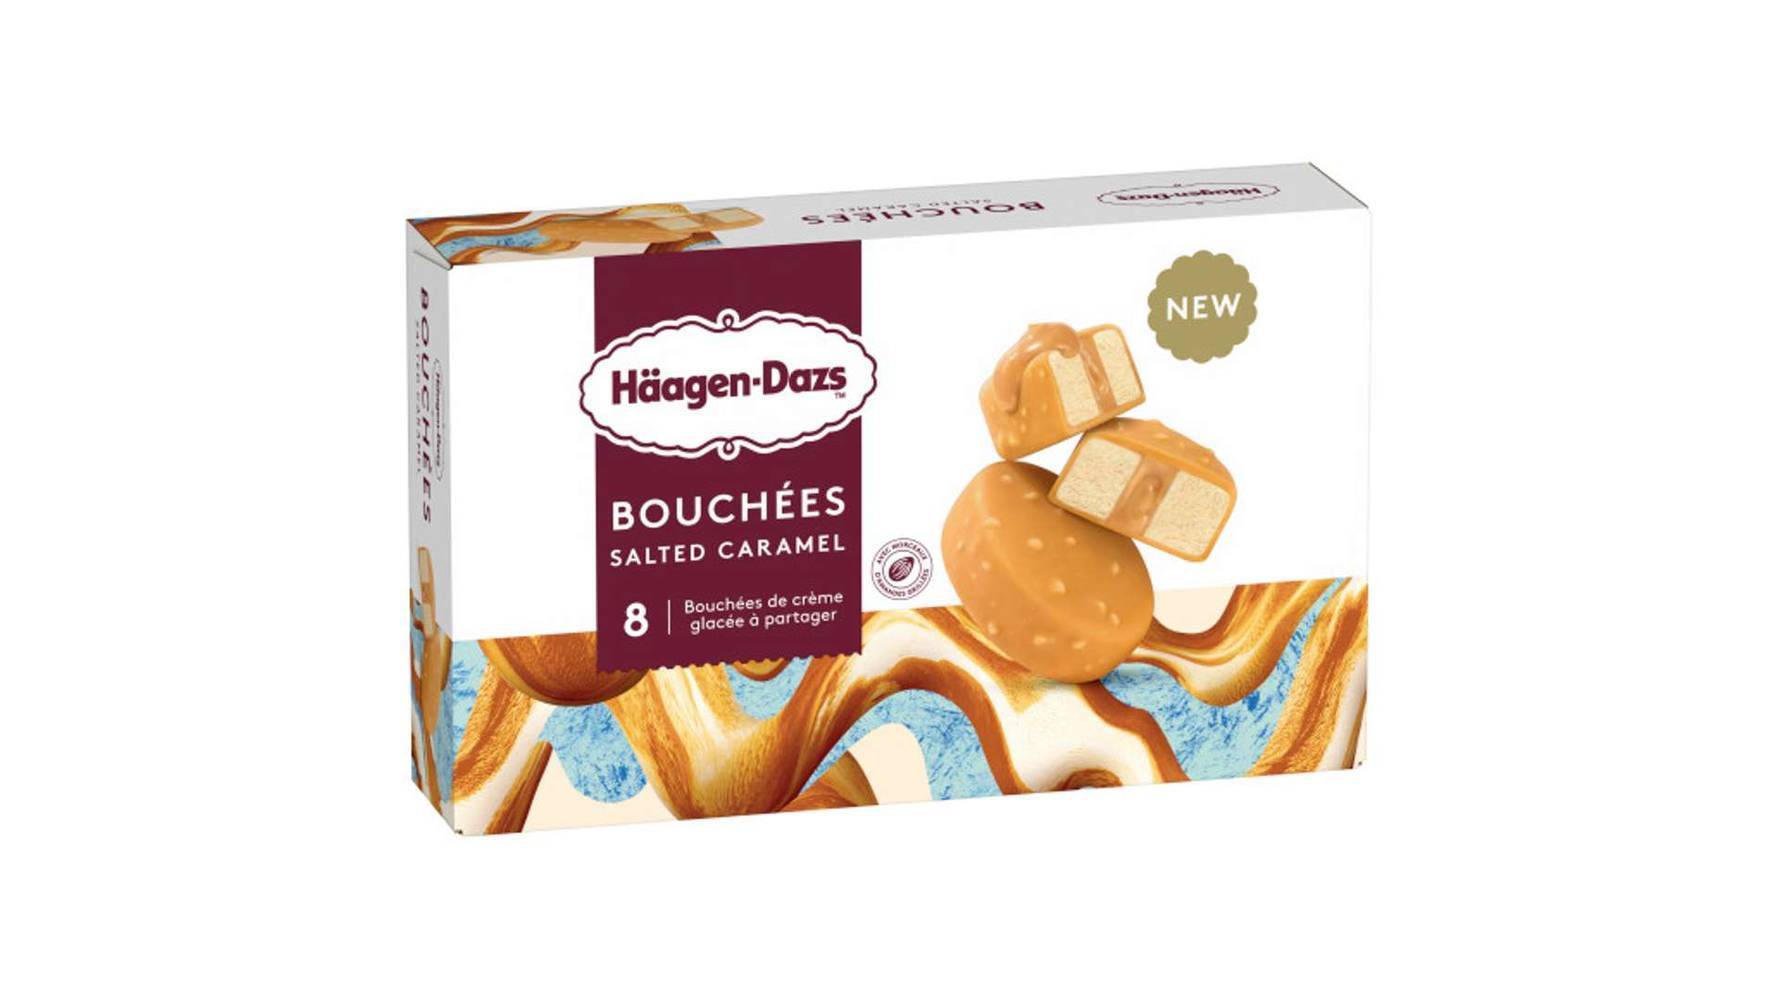 Häagen-Dazs Hd 8 bouchees caramel sale 120g